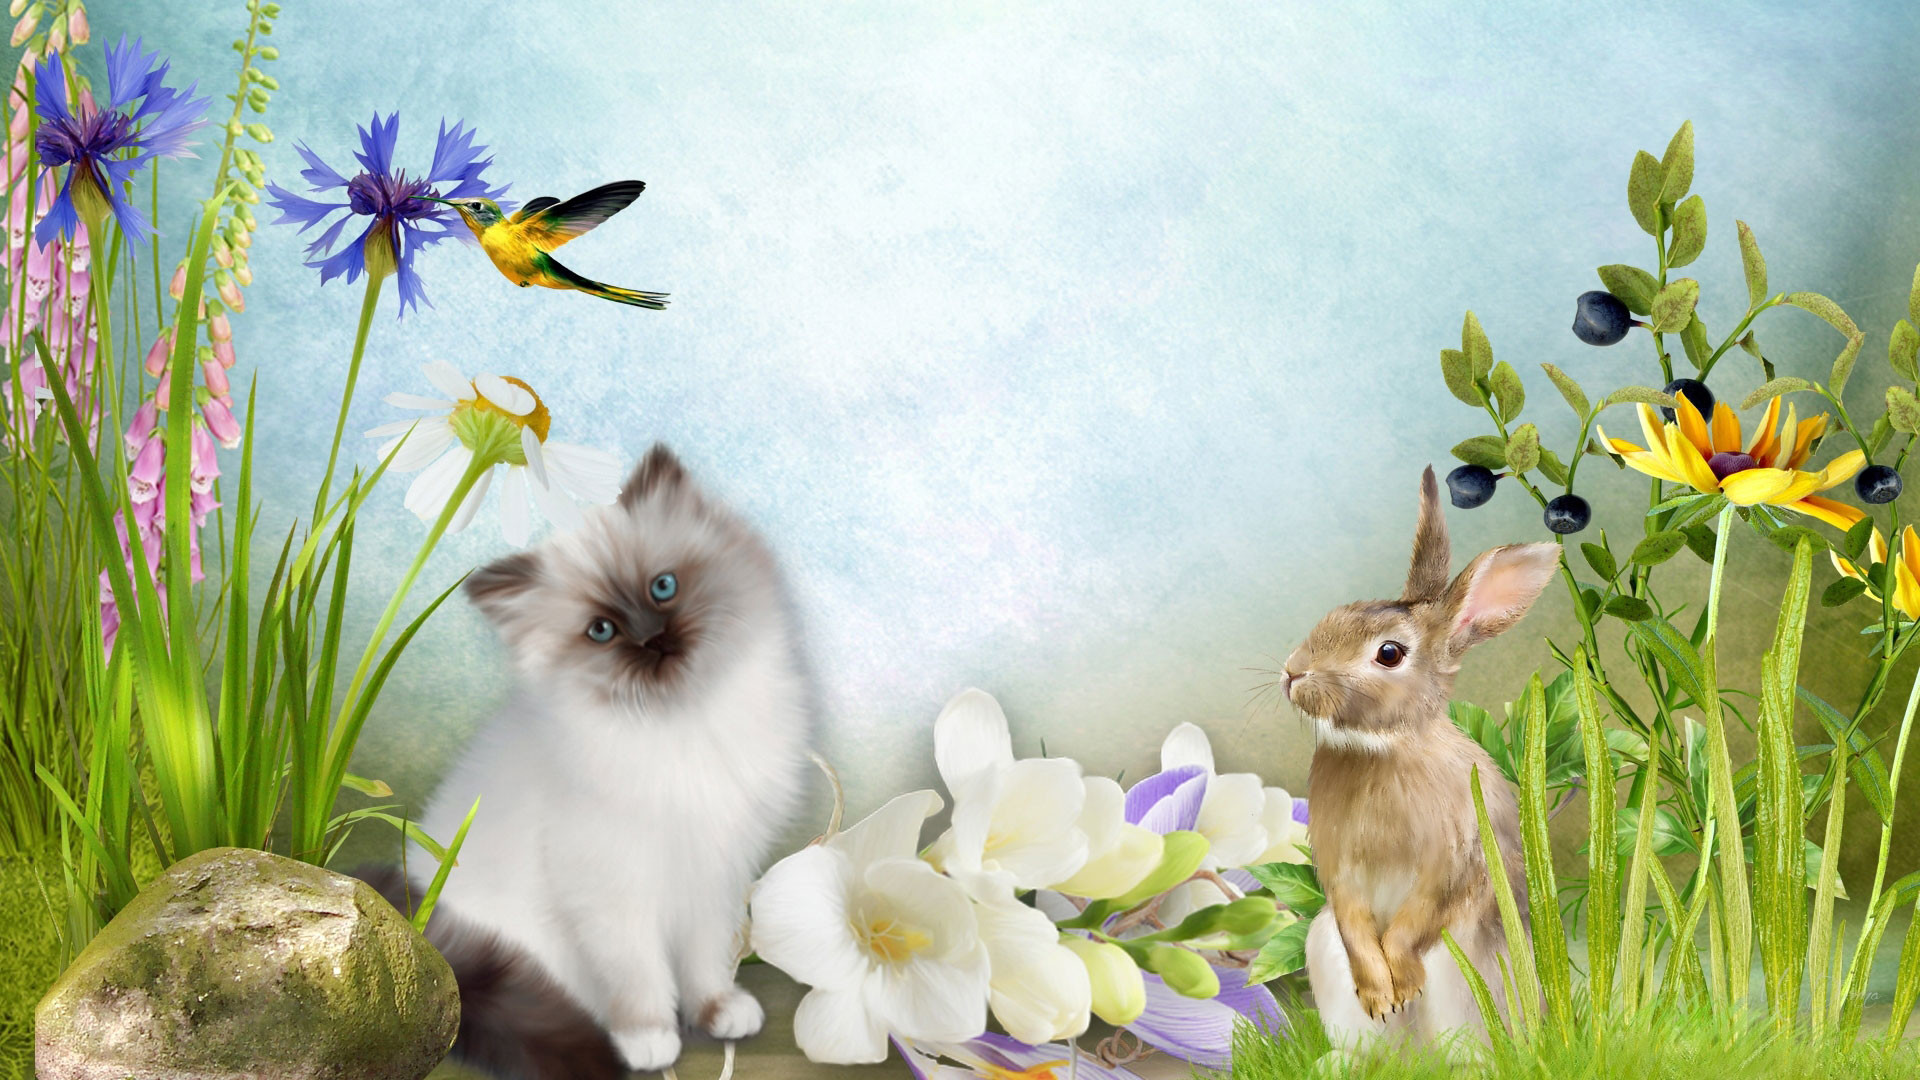 1920x1080 hd pics photos animated cat rabbit nature flowers birds hd quality desktop  background wallpaper